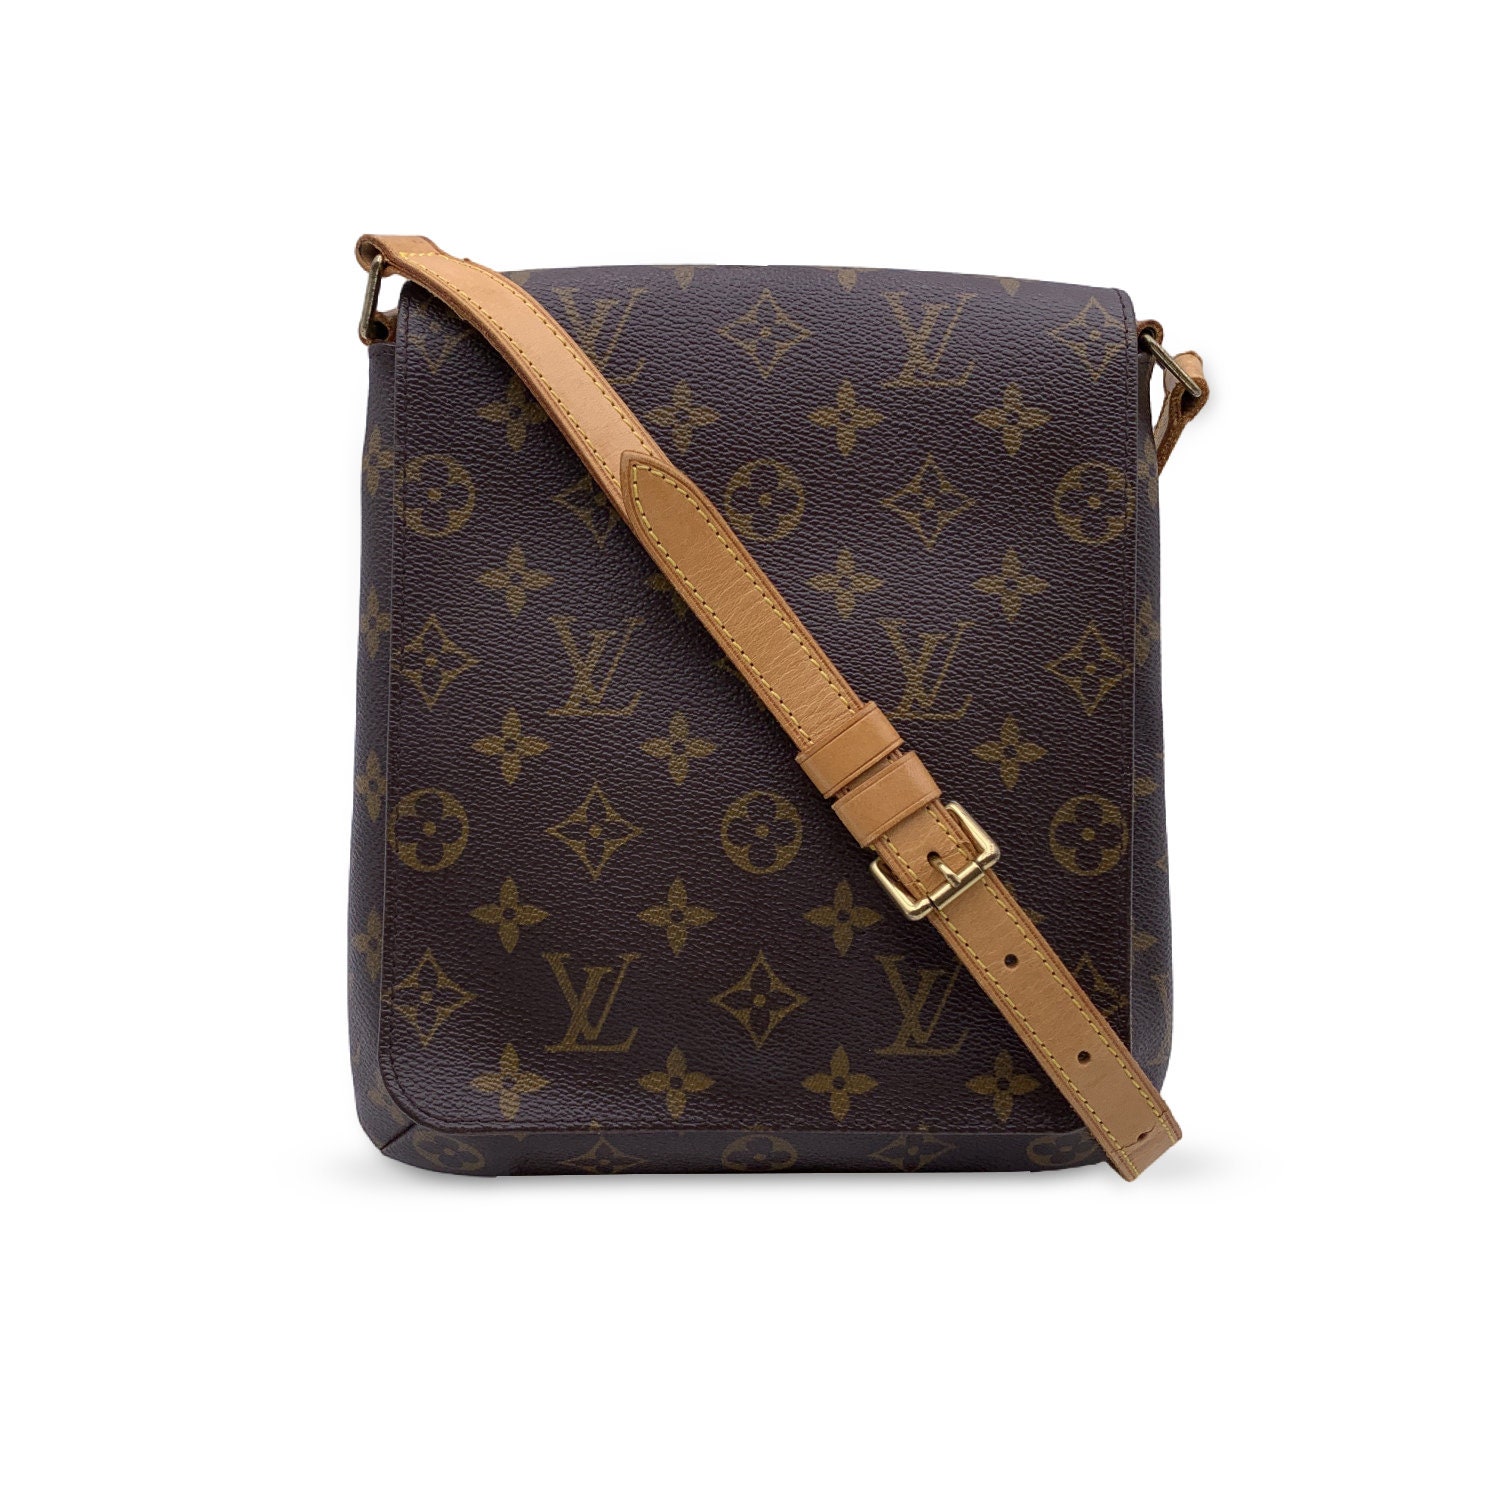 Buy Louis Vuitton Crossbody Bag Online In India -  India